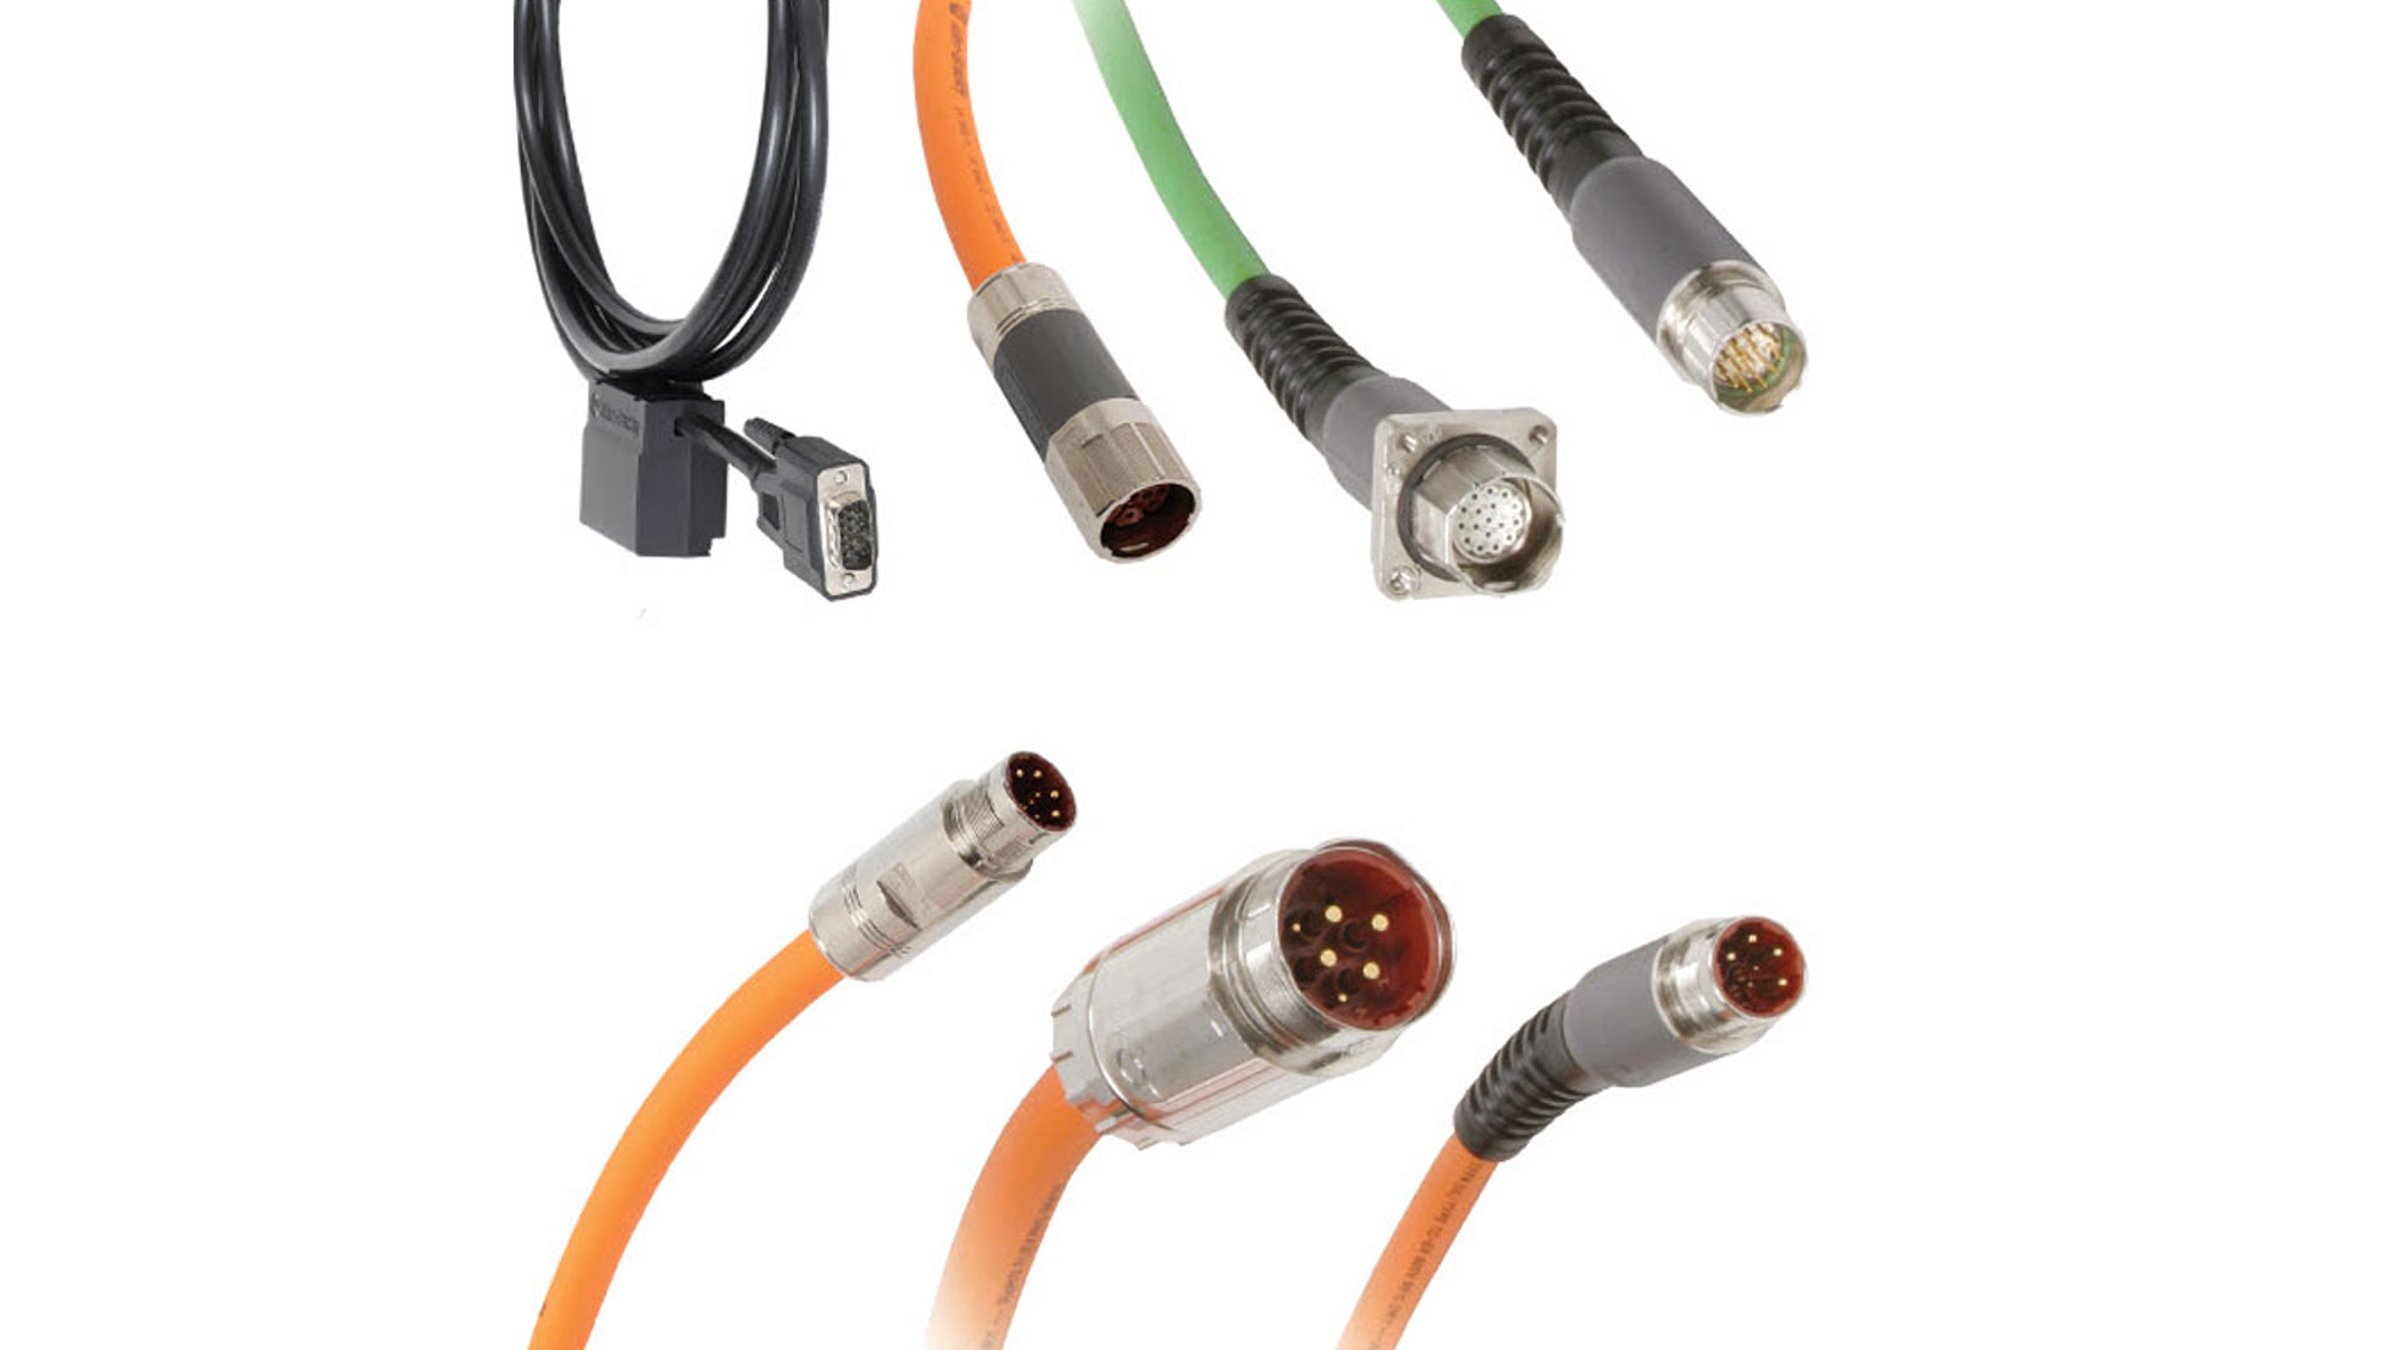 Allen-Bradley Bulletin 2090 Kinetix® 电缆是完备的标准和连续柔性电缆系列，具有 SpeedTEC® DIN 连接器，可进行快速的四分之一圈连接。